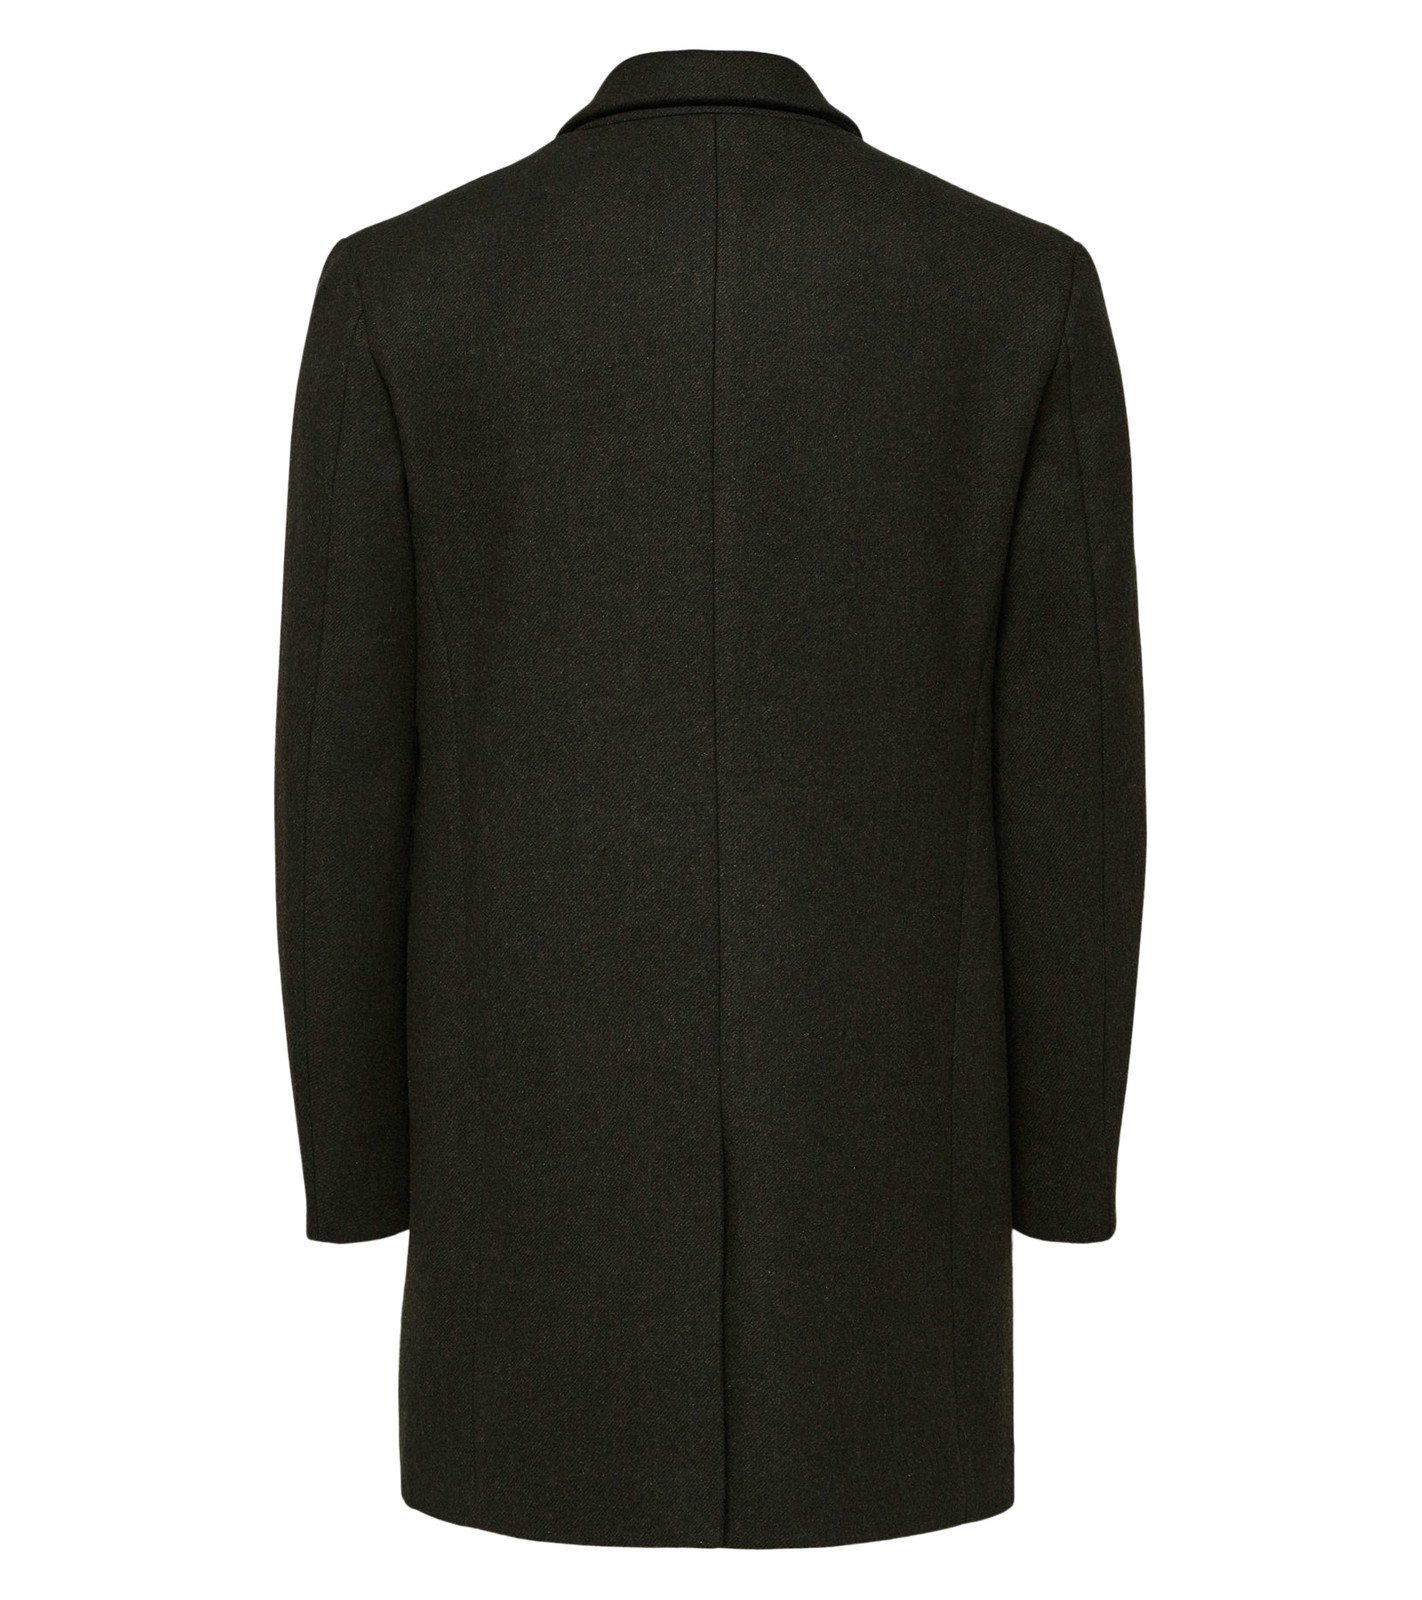 SELECTED HOMME Wintermantel »SELECTED HOMME Herren Business-Mantel  stilvoller Woll-Mantel aus recycelter Wolle Herbst-Jacke Dunkel-Grün«  online kaufen | OTTO